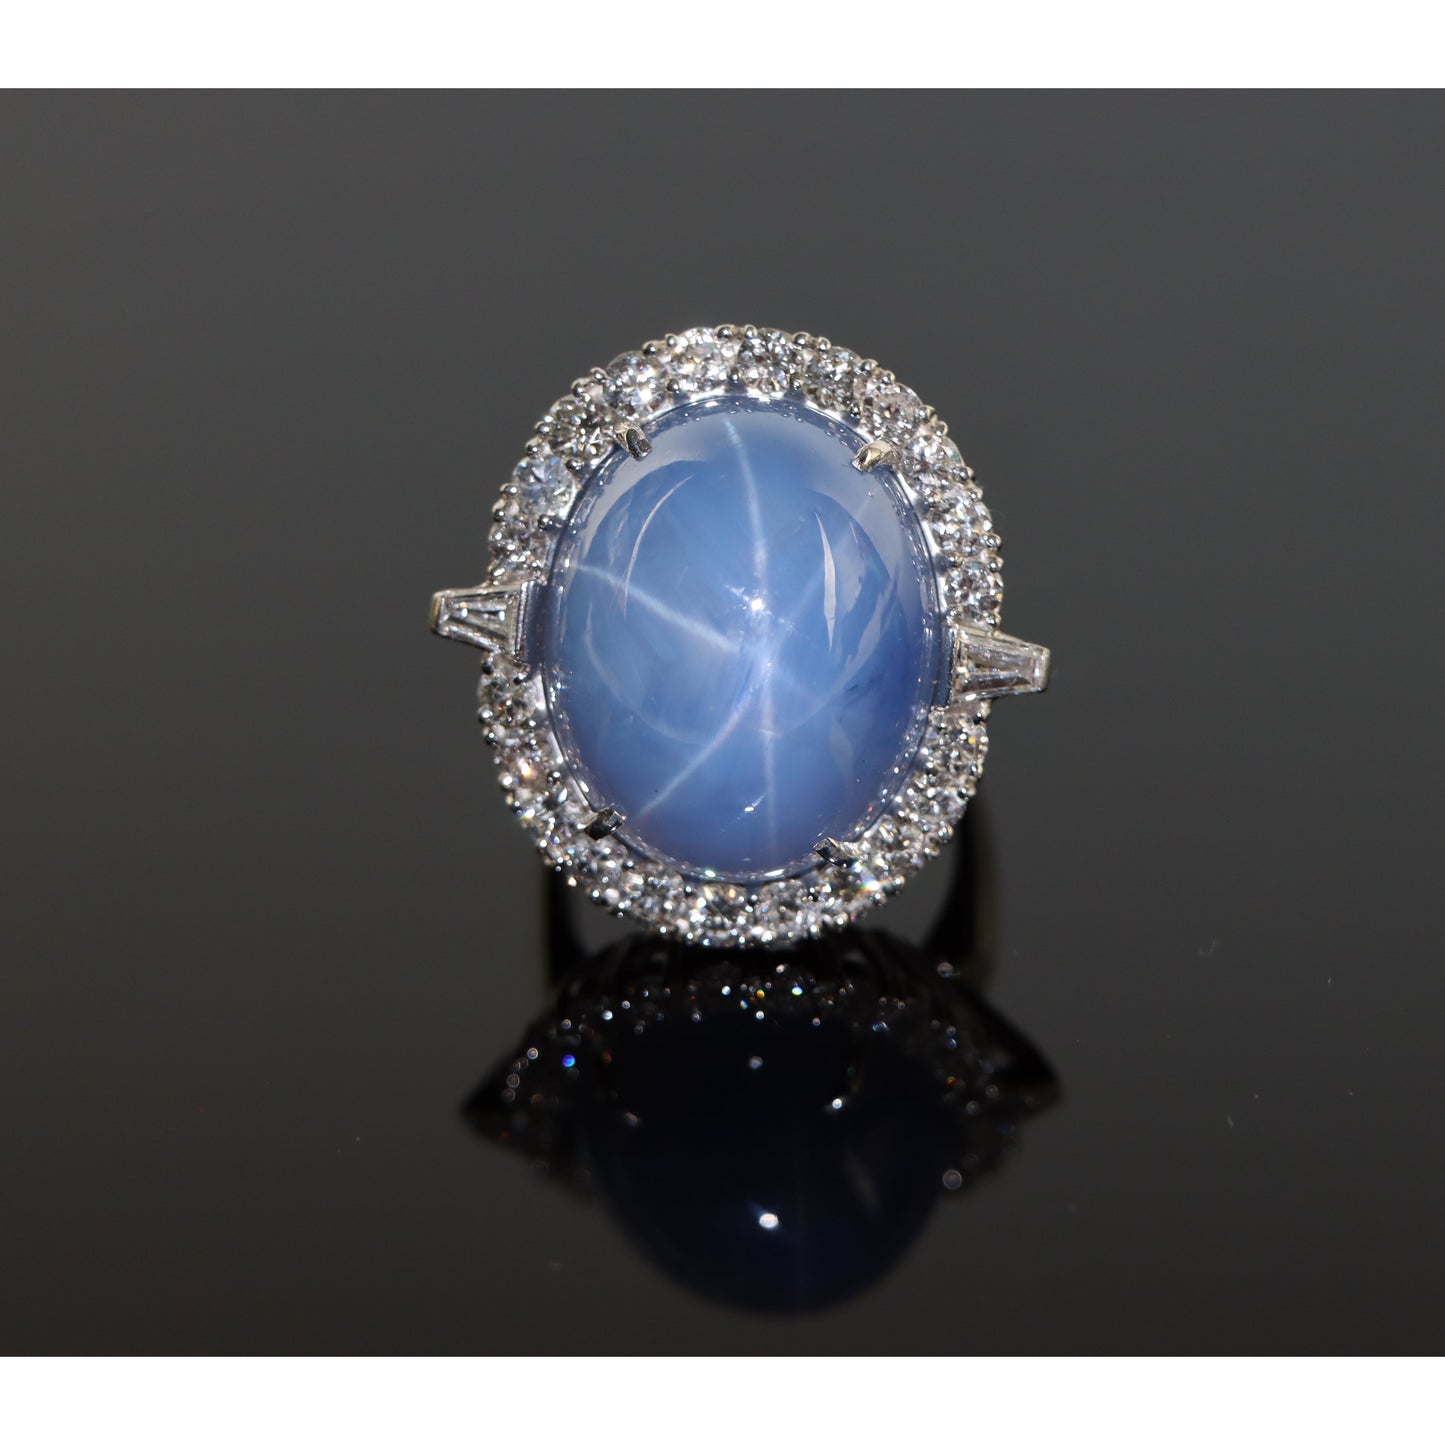 48 Carat Star Sapphire Cabochon and Diamond Ring